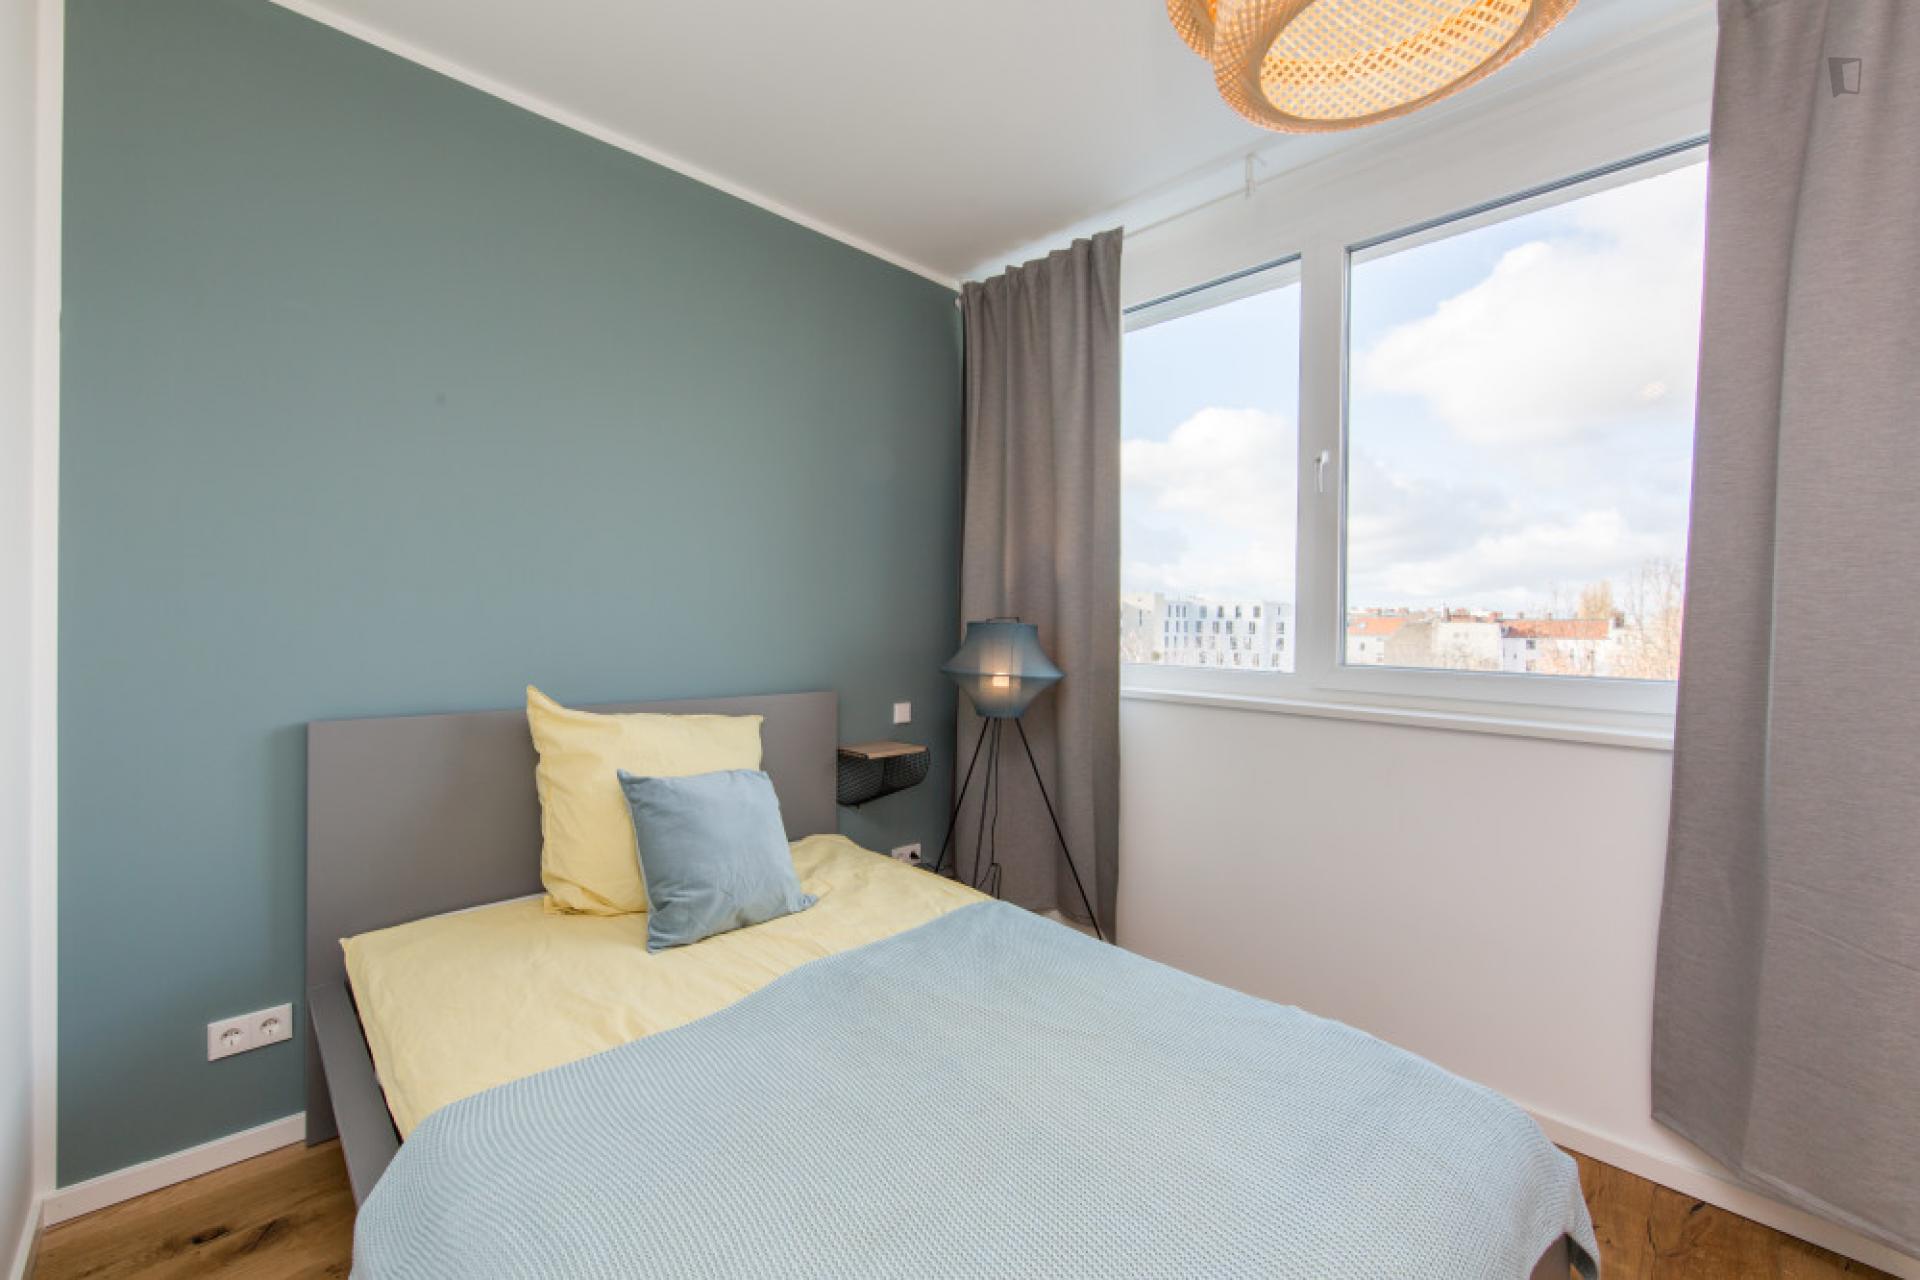 Nazareth - Private room in a shared flat in Berlin